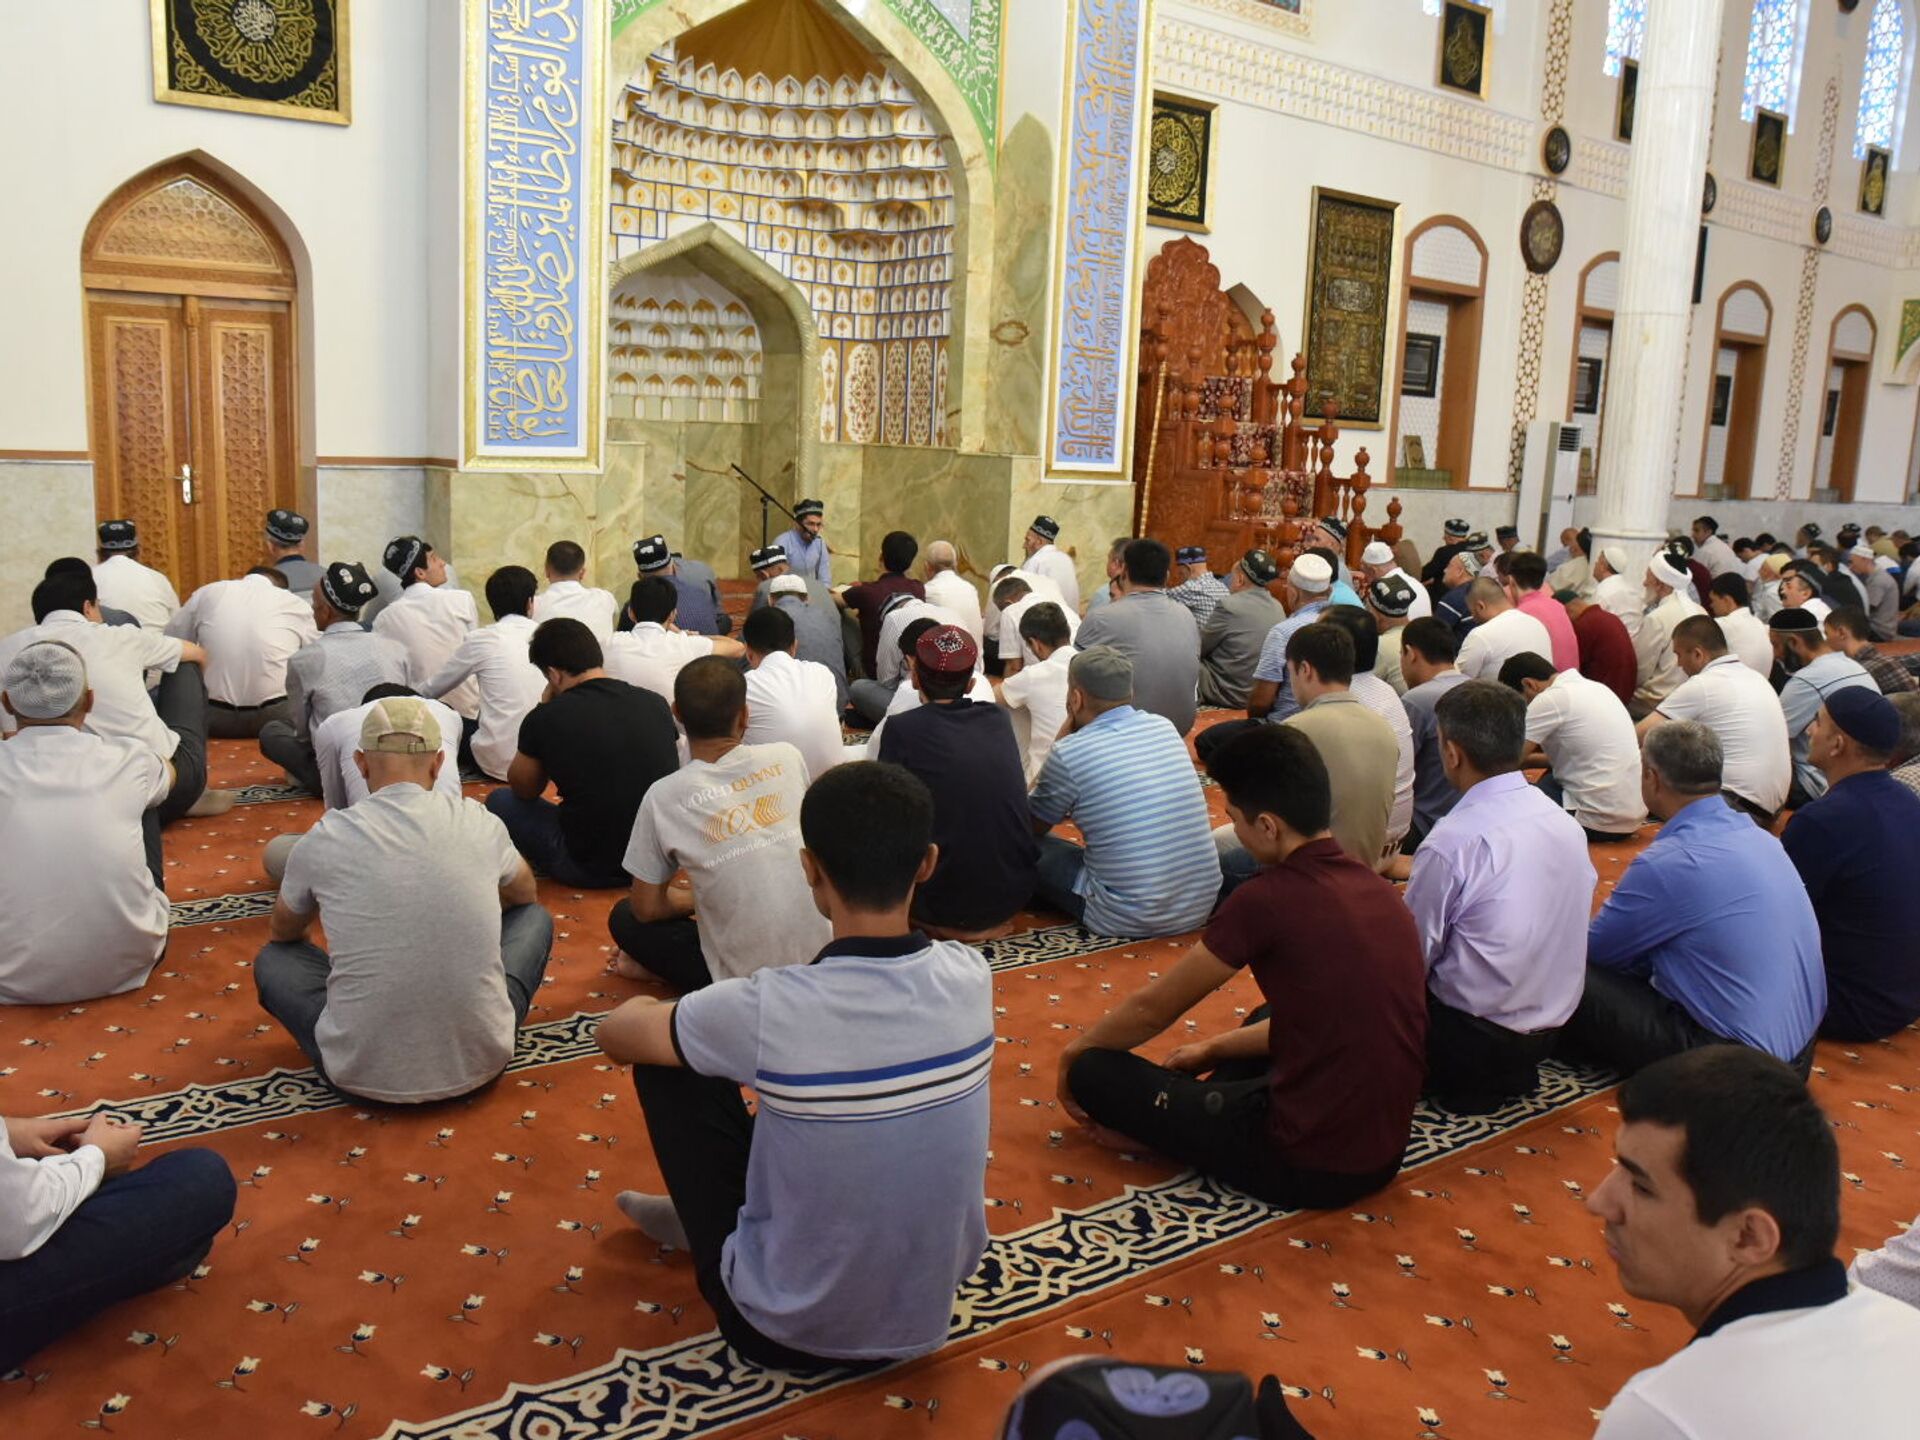 Время намаза таравих сегодня. Мечеть Джума намаз в Таджикистане. Джума мечеть таравих. Таравих намаз в Джума мечети. Соборная мечеть Джума намаз.